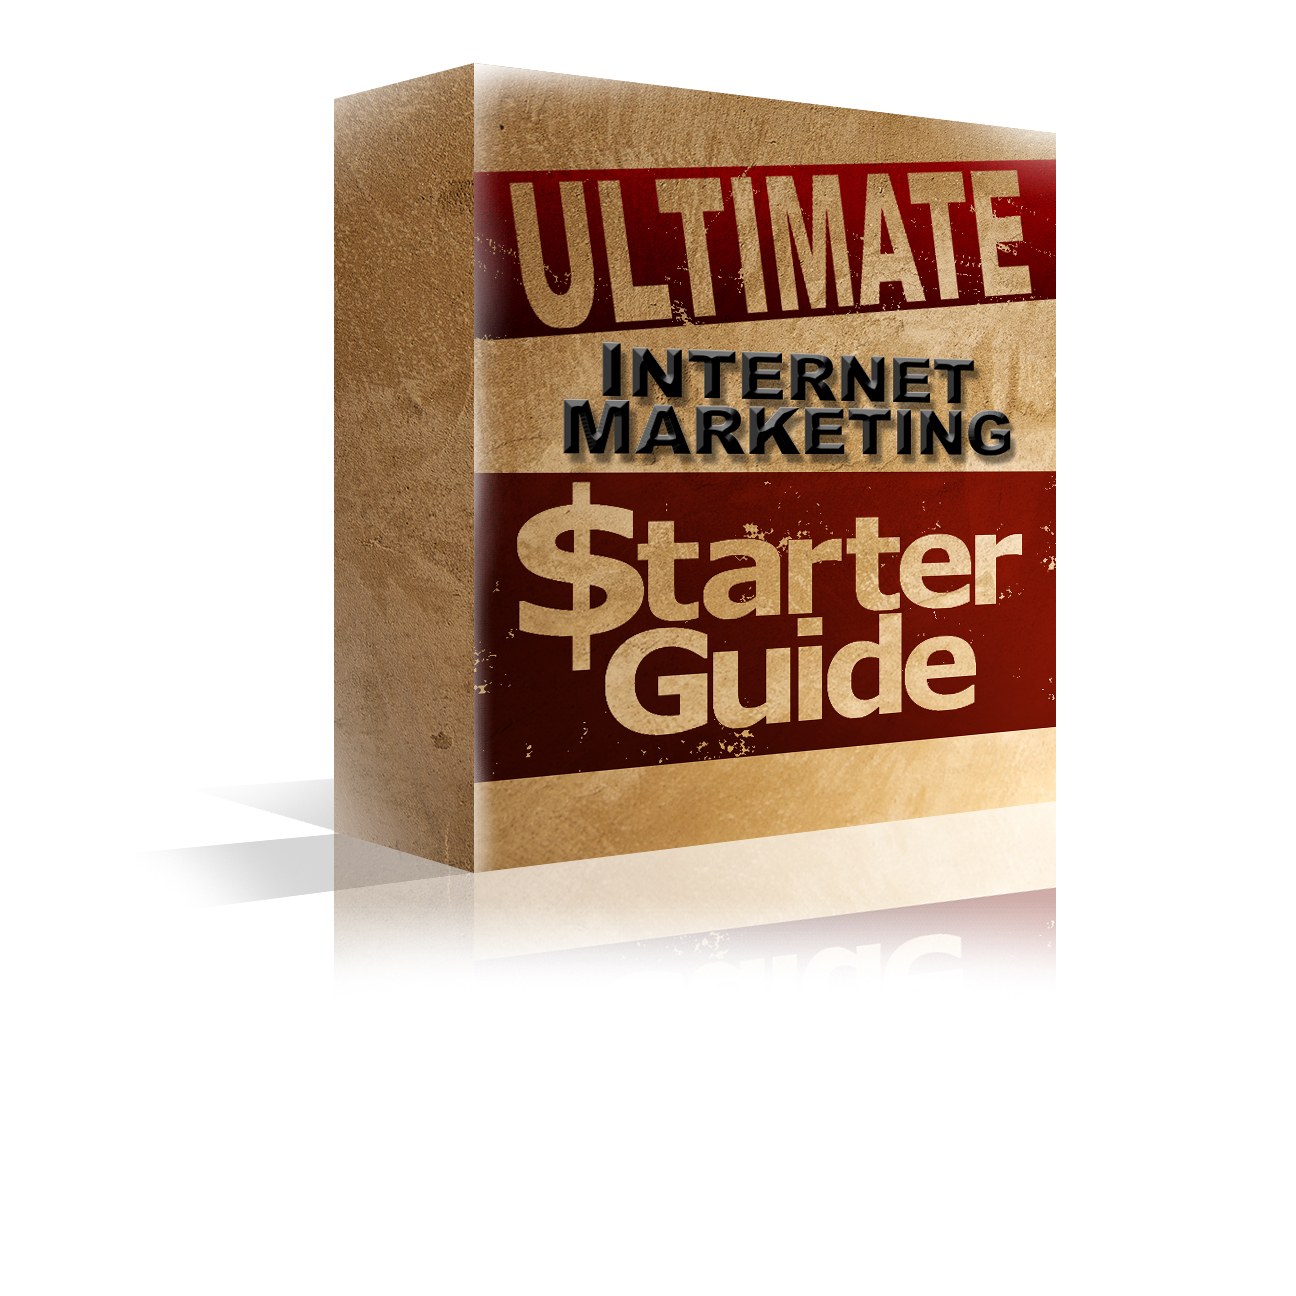 Ultimate Internet Marketing Starter Guide